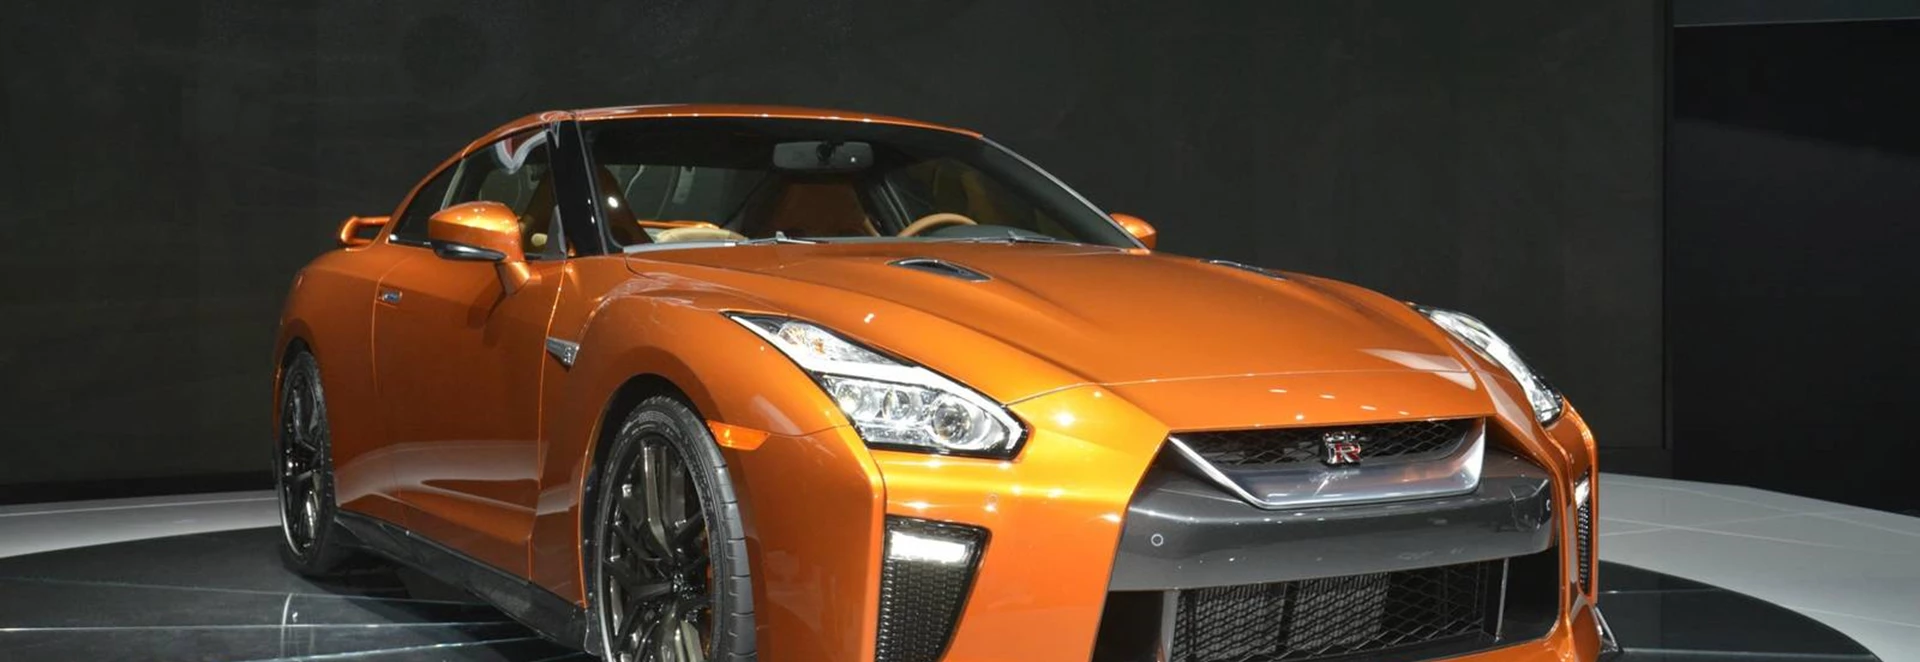 Nissan GT-R facelift set for New York reveal